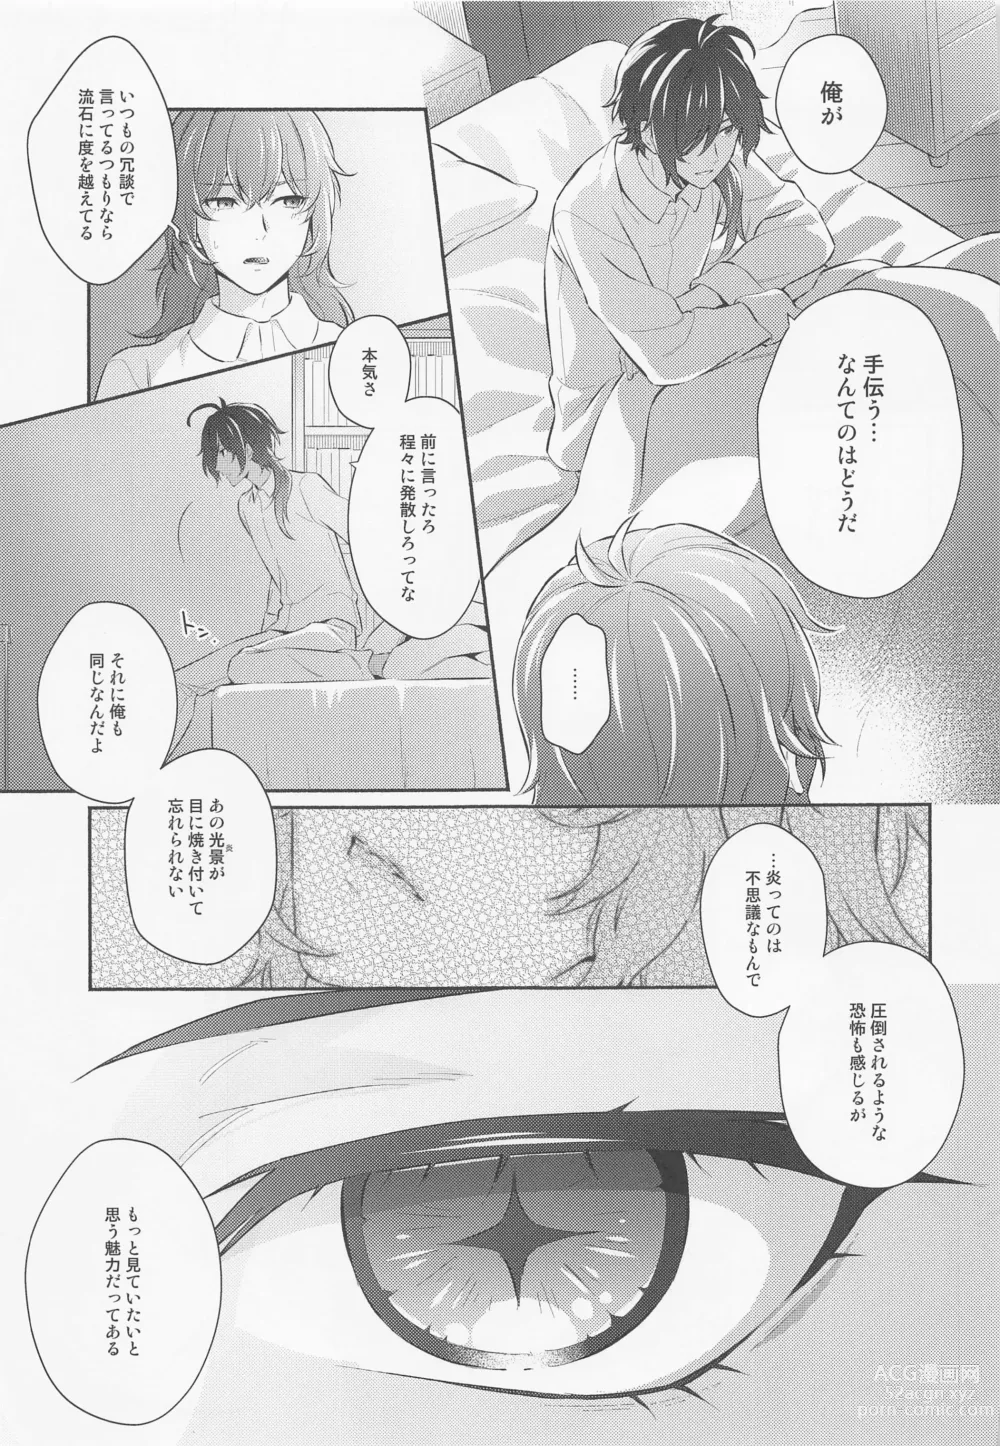 Page 20 of doujinshi Kimi to Yoake o